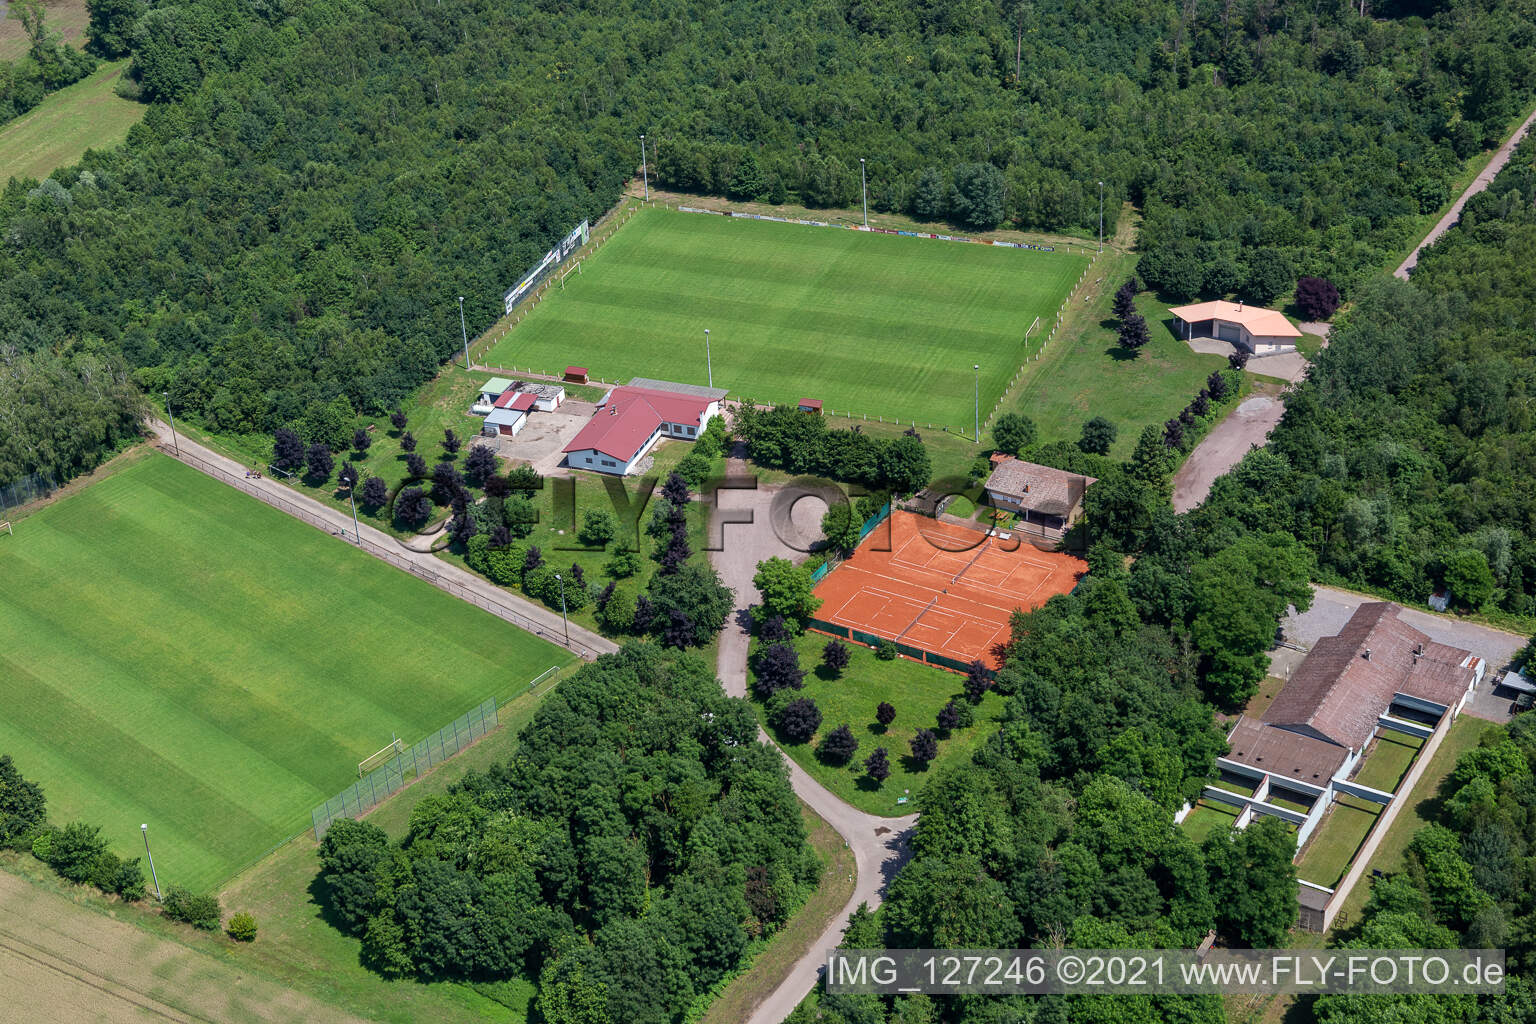 Soccer field Steinweiler in Steinweiler in the state Rhineland-Palatinate, Germany